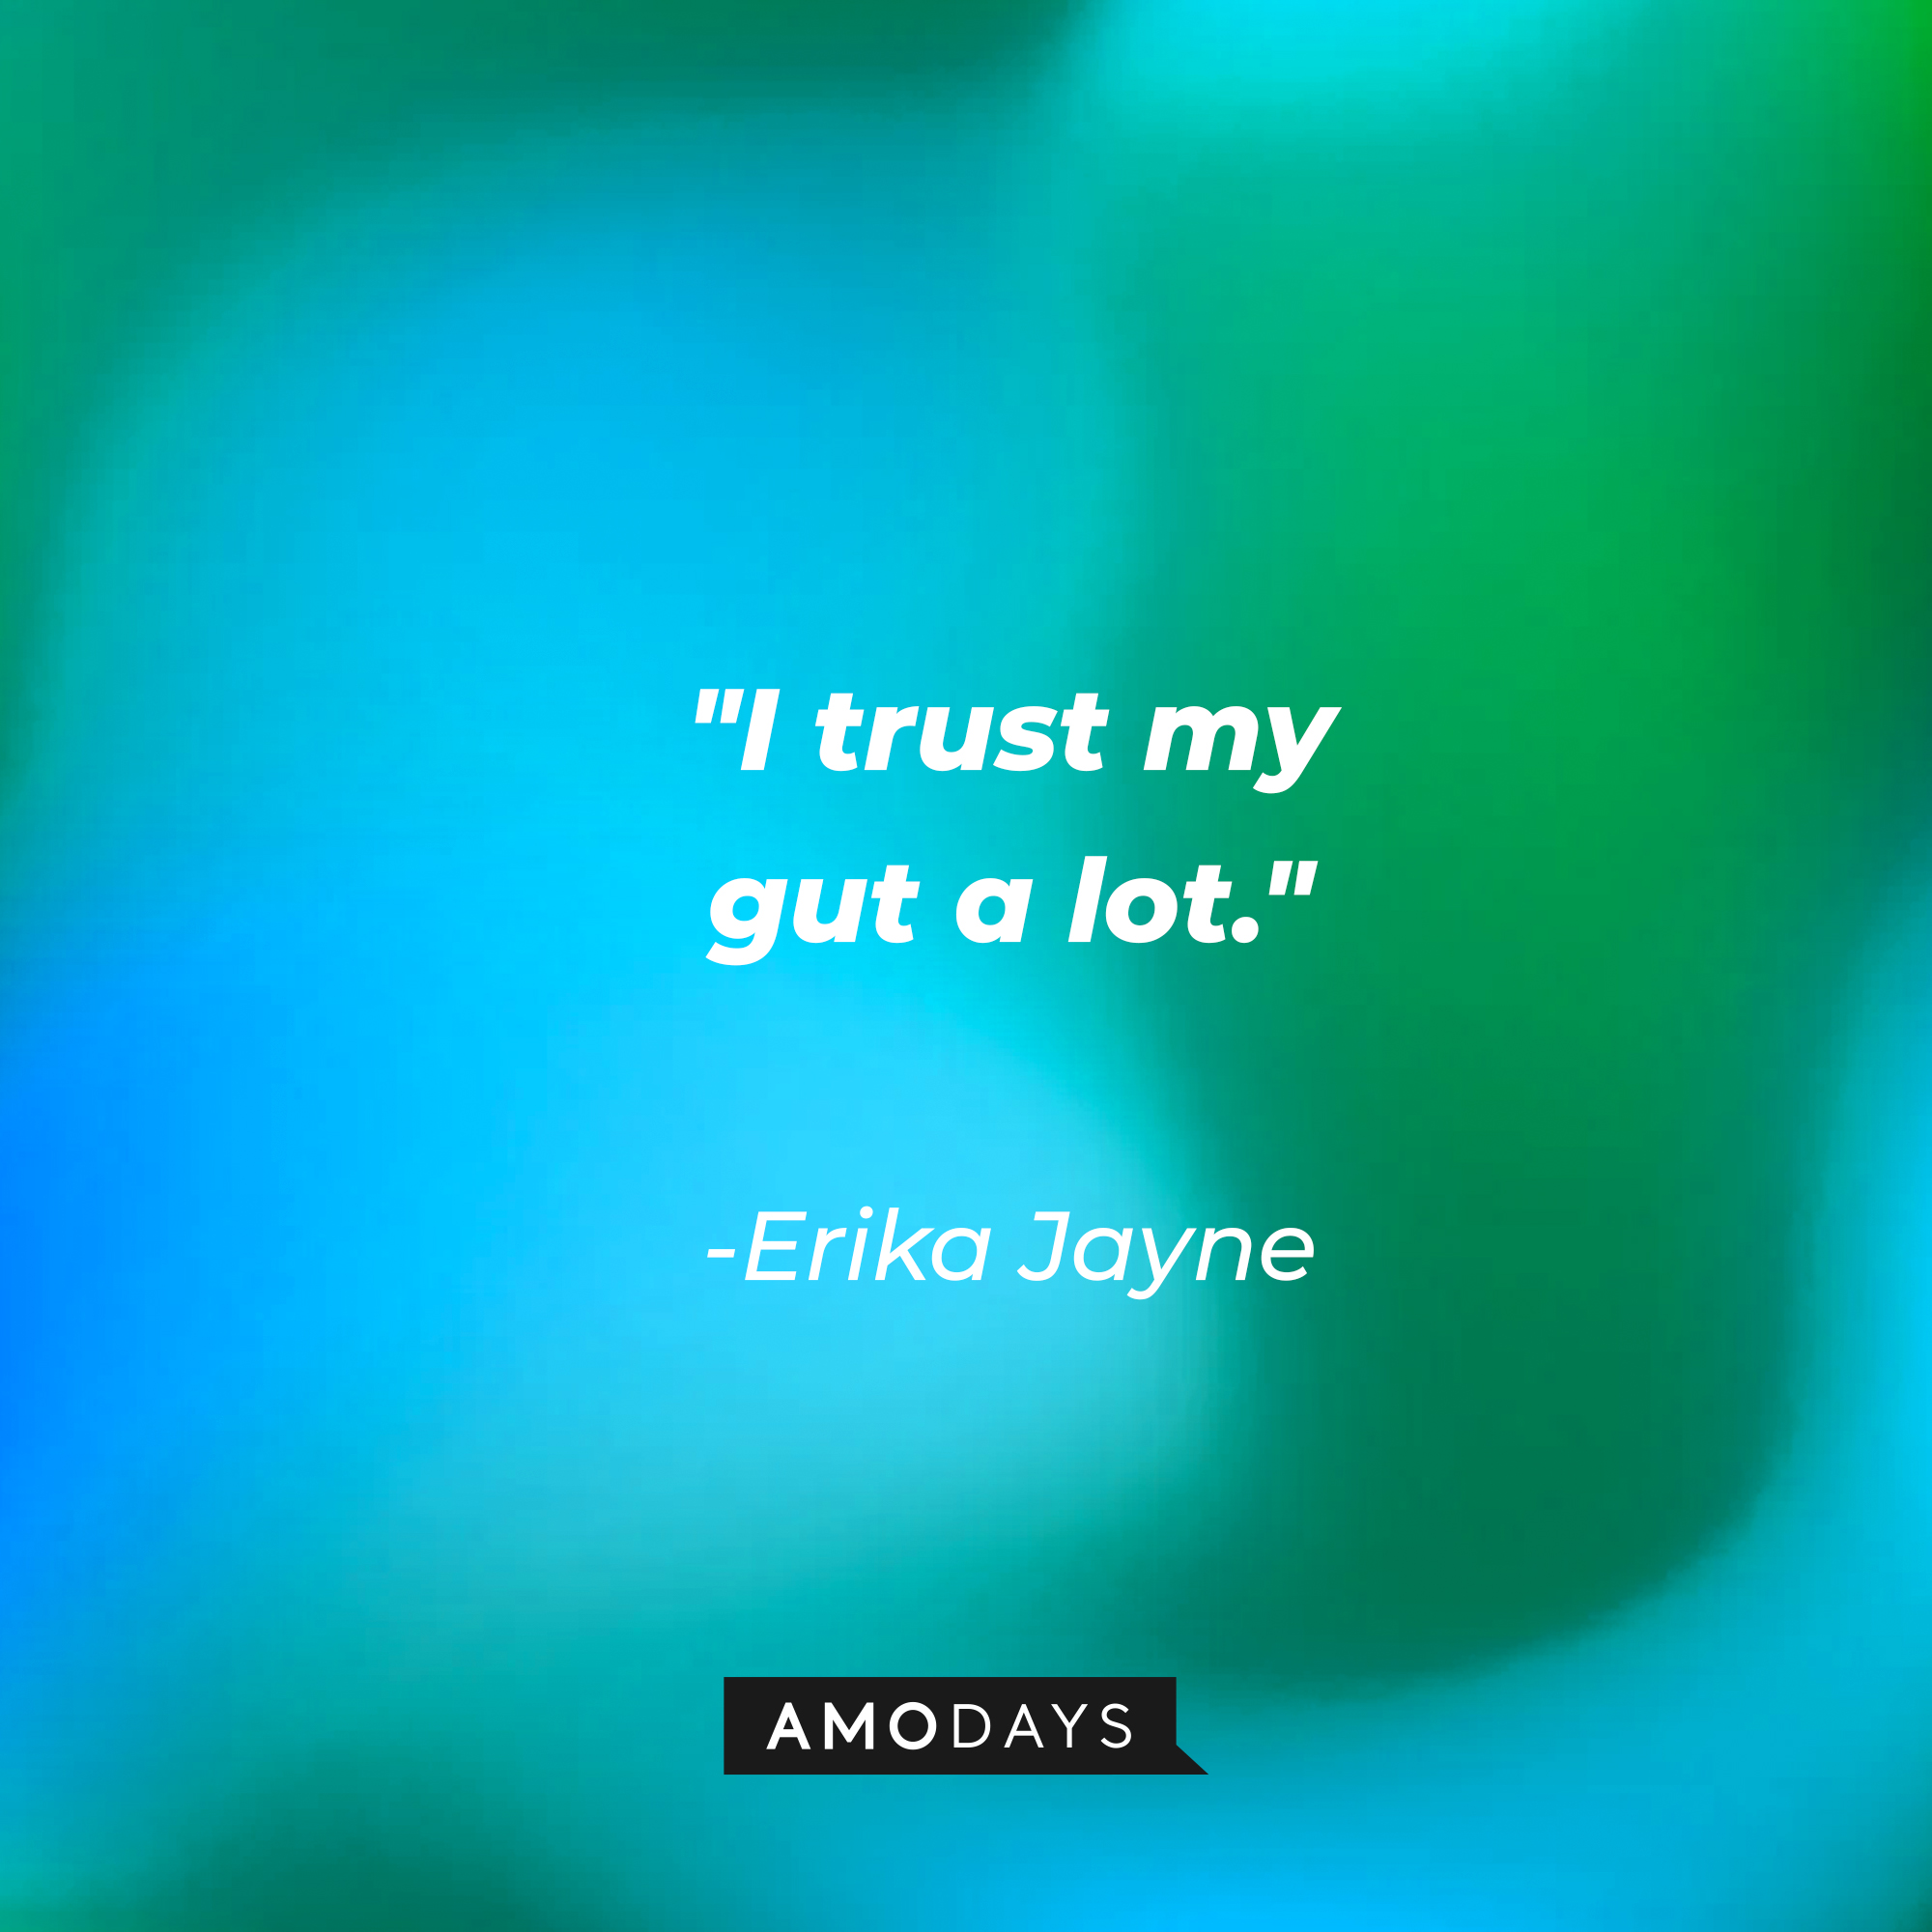 Erika Jayne’s quote: "I trust my gut a lot." | Image: Amodays